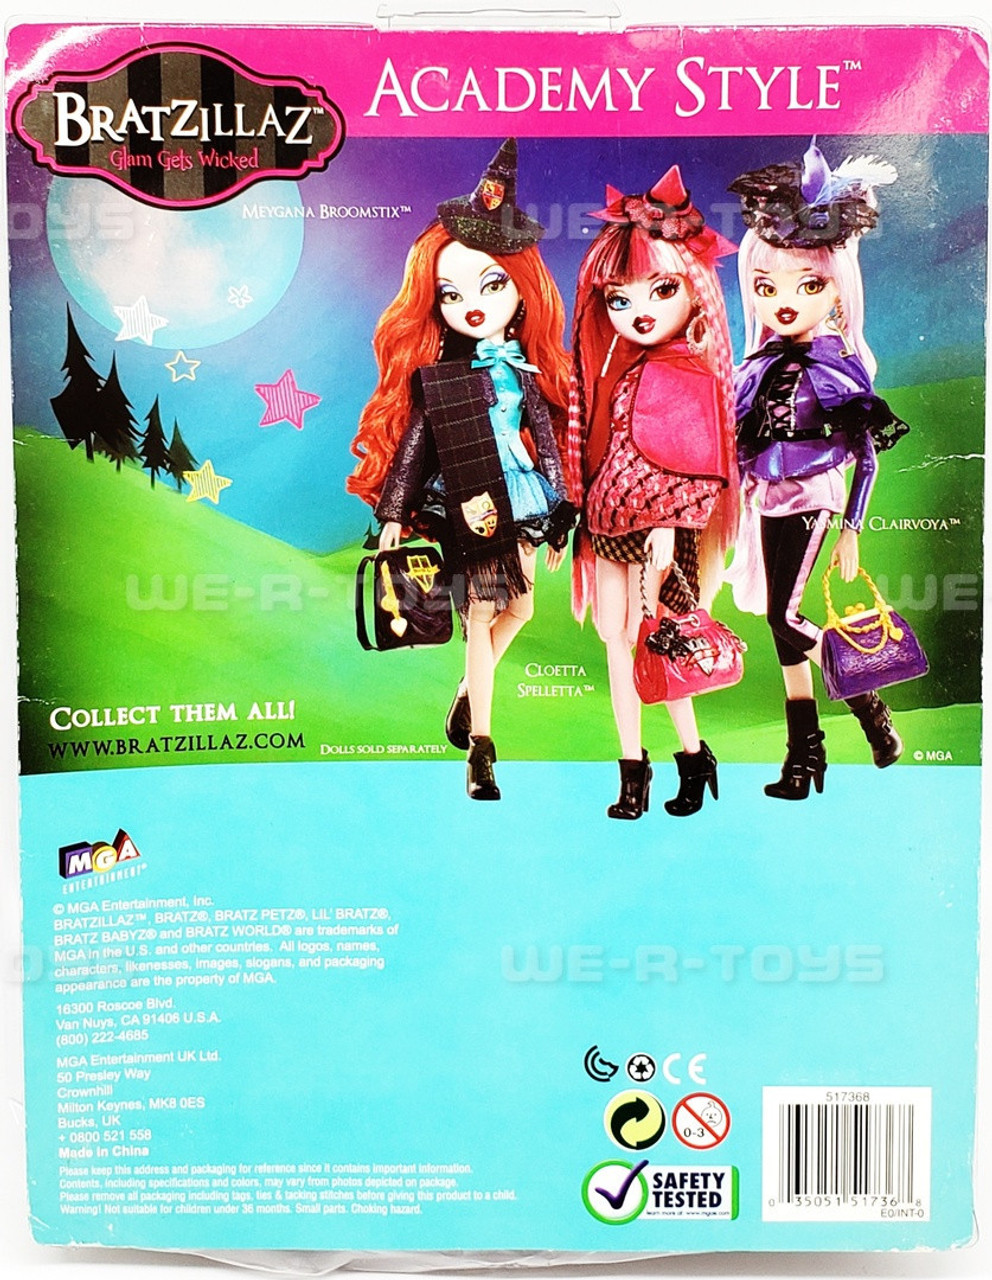 Meygana Broomstix  Monster dolls, Fashion dolls, Black bratz doll